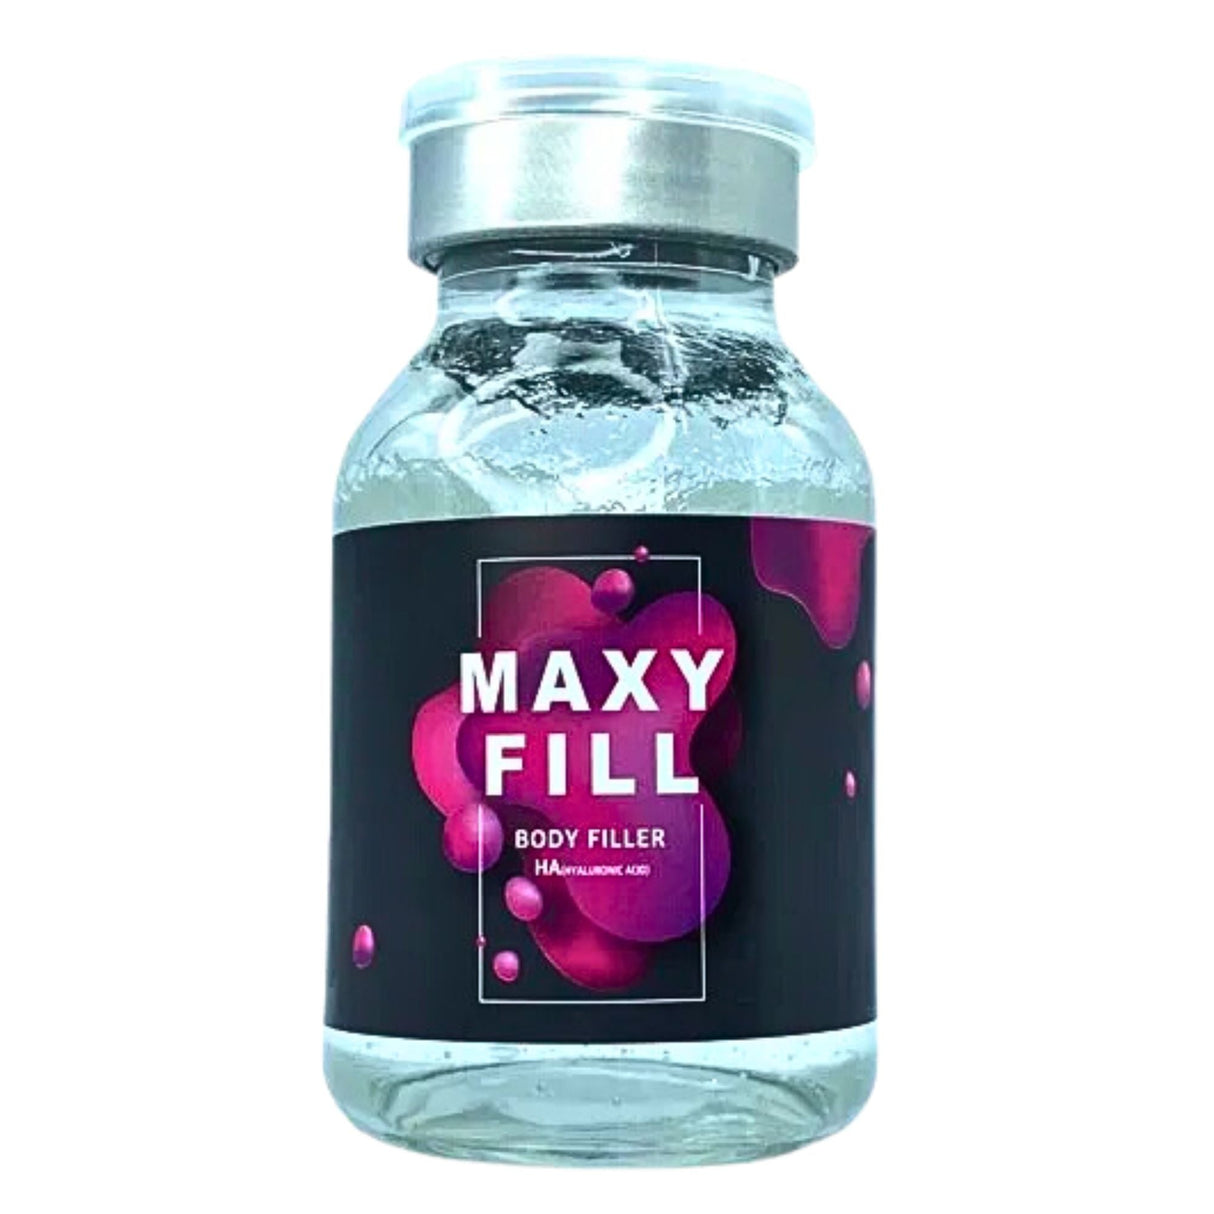 Maxy Fill Body - Filler Lux™